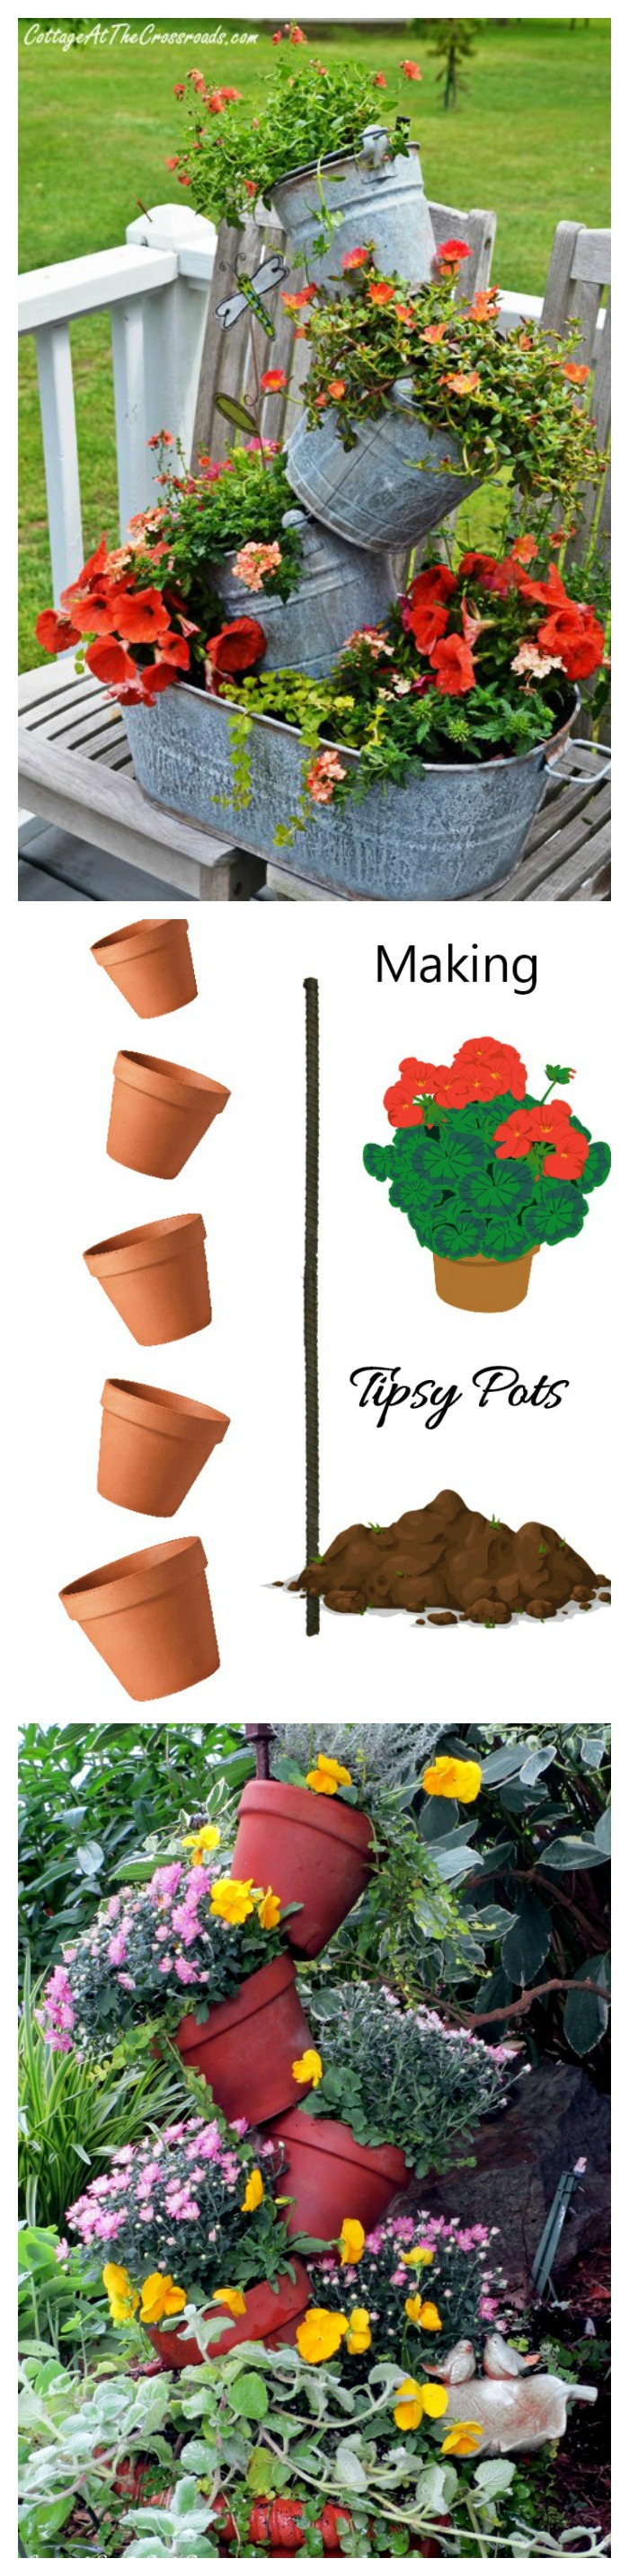 Beste Topsy Turvy Pflanzgefäße - Kreative Gartenarbeit Tipsy Pots